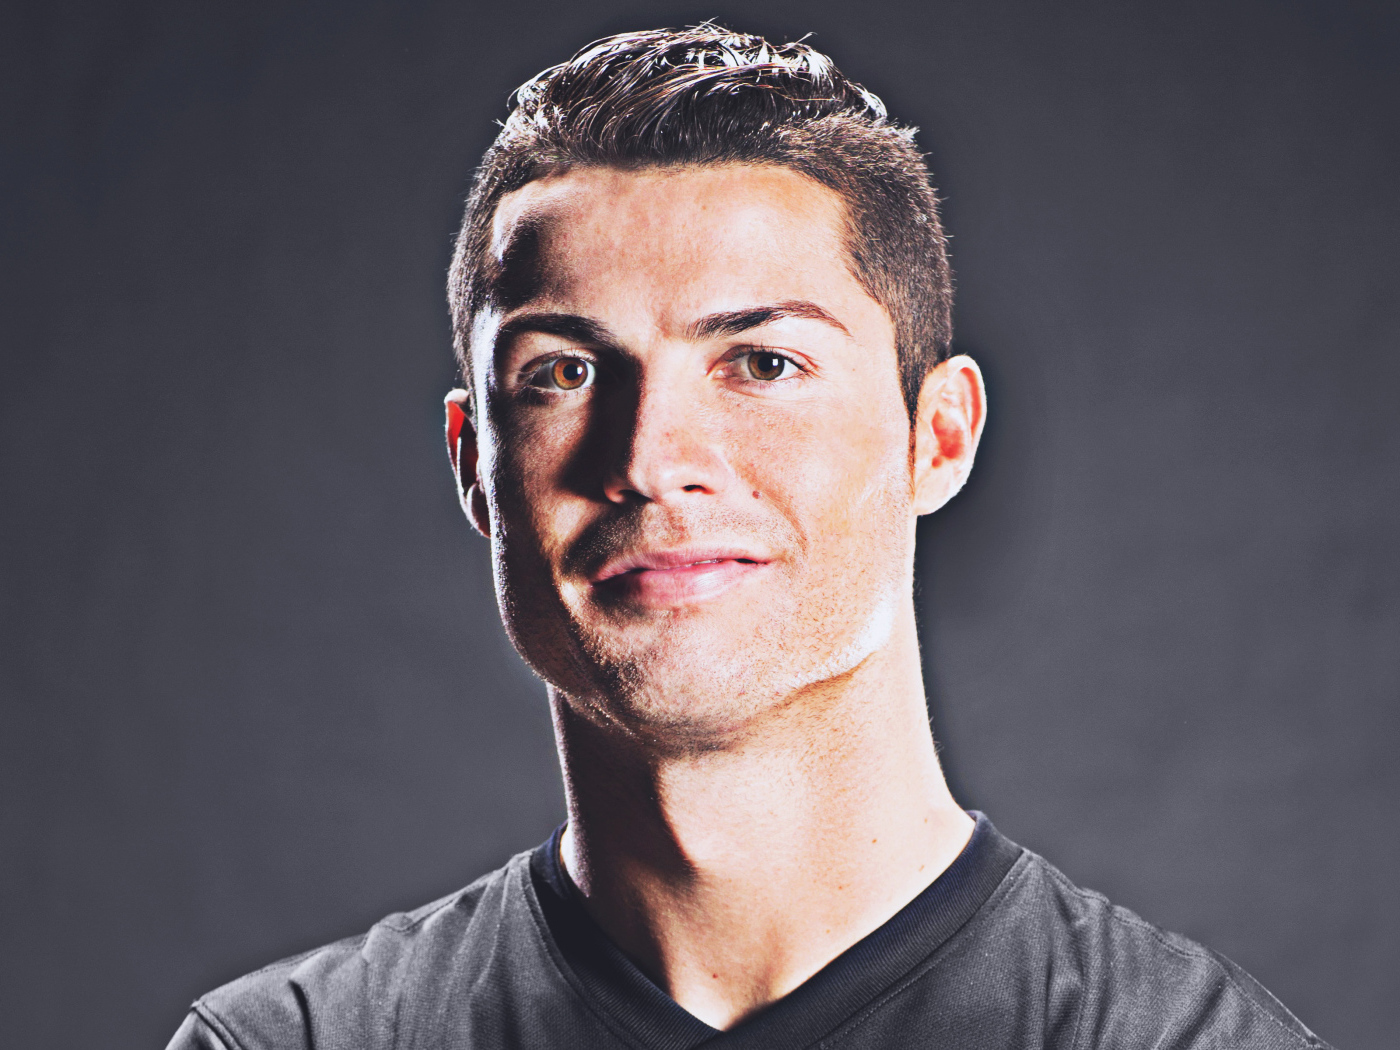 Football player Cristiano Ronaldo close-up face